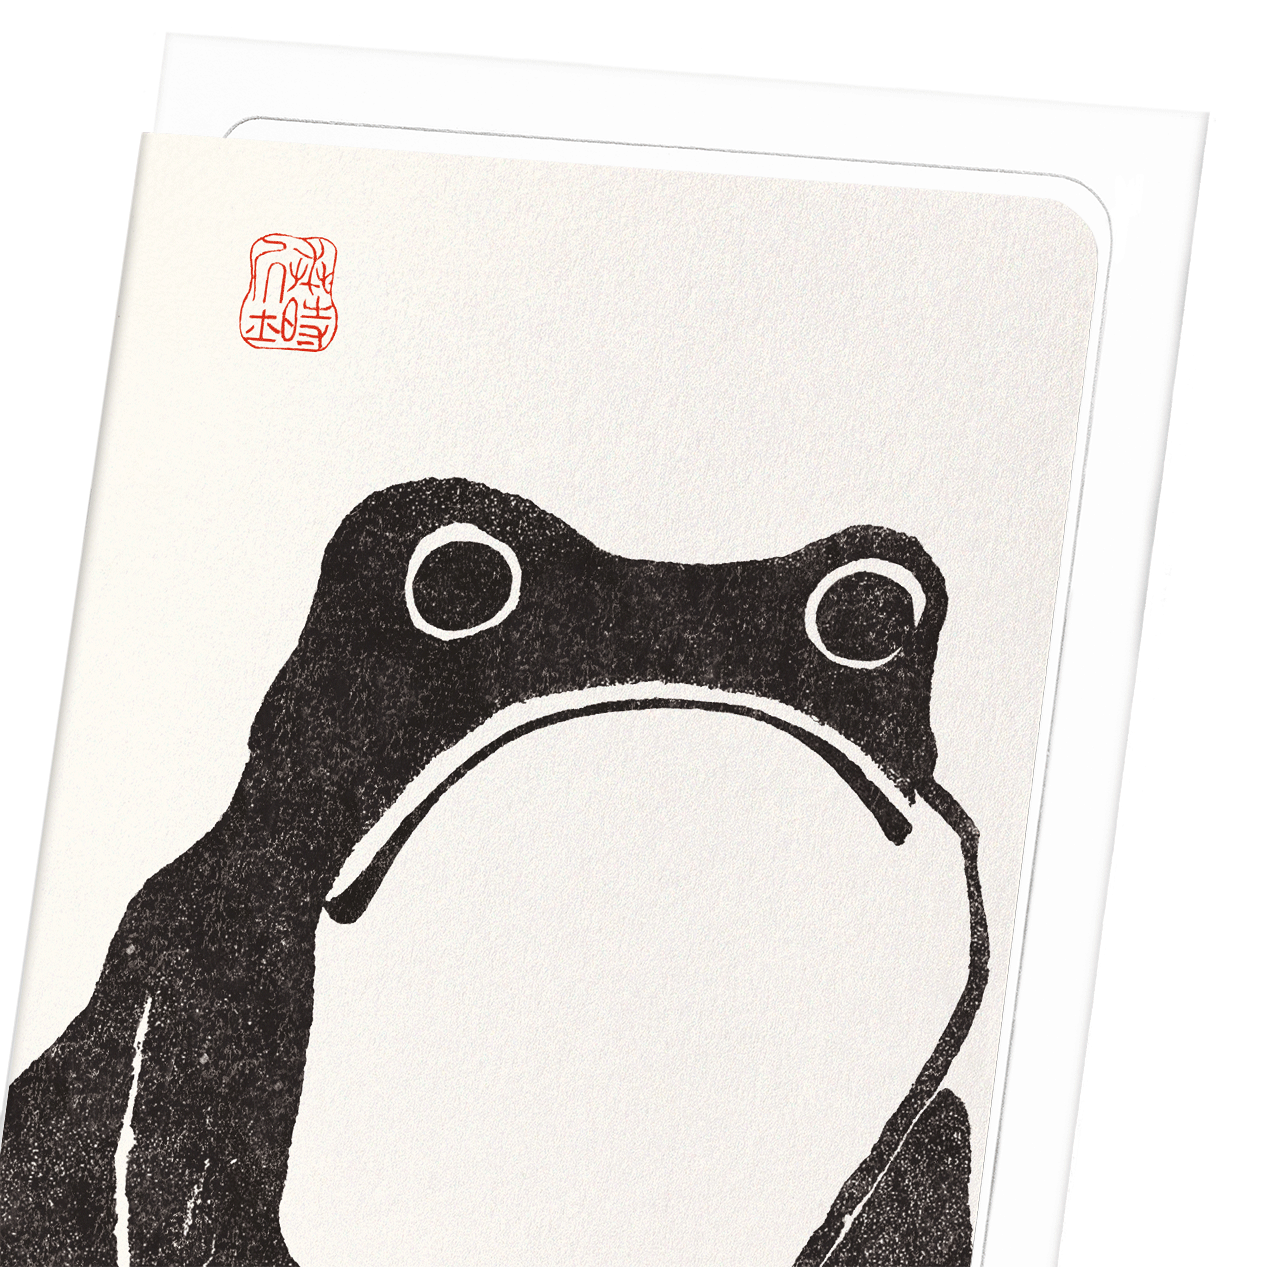 FROG (1814): Japanese Greeting Card